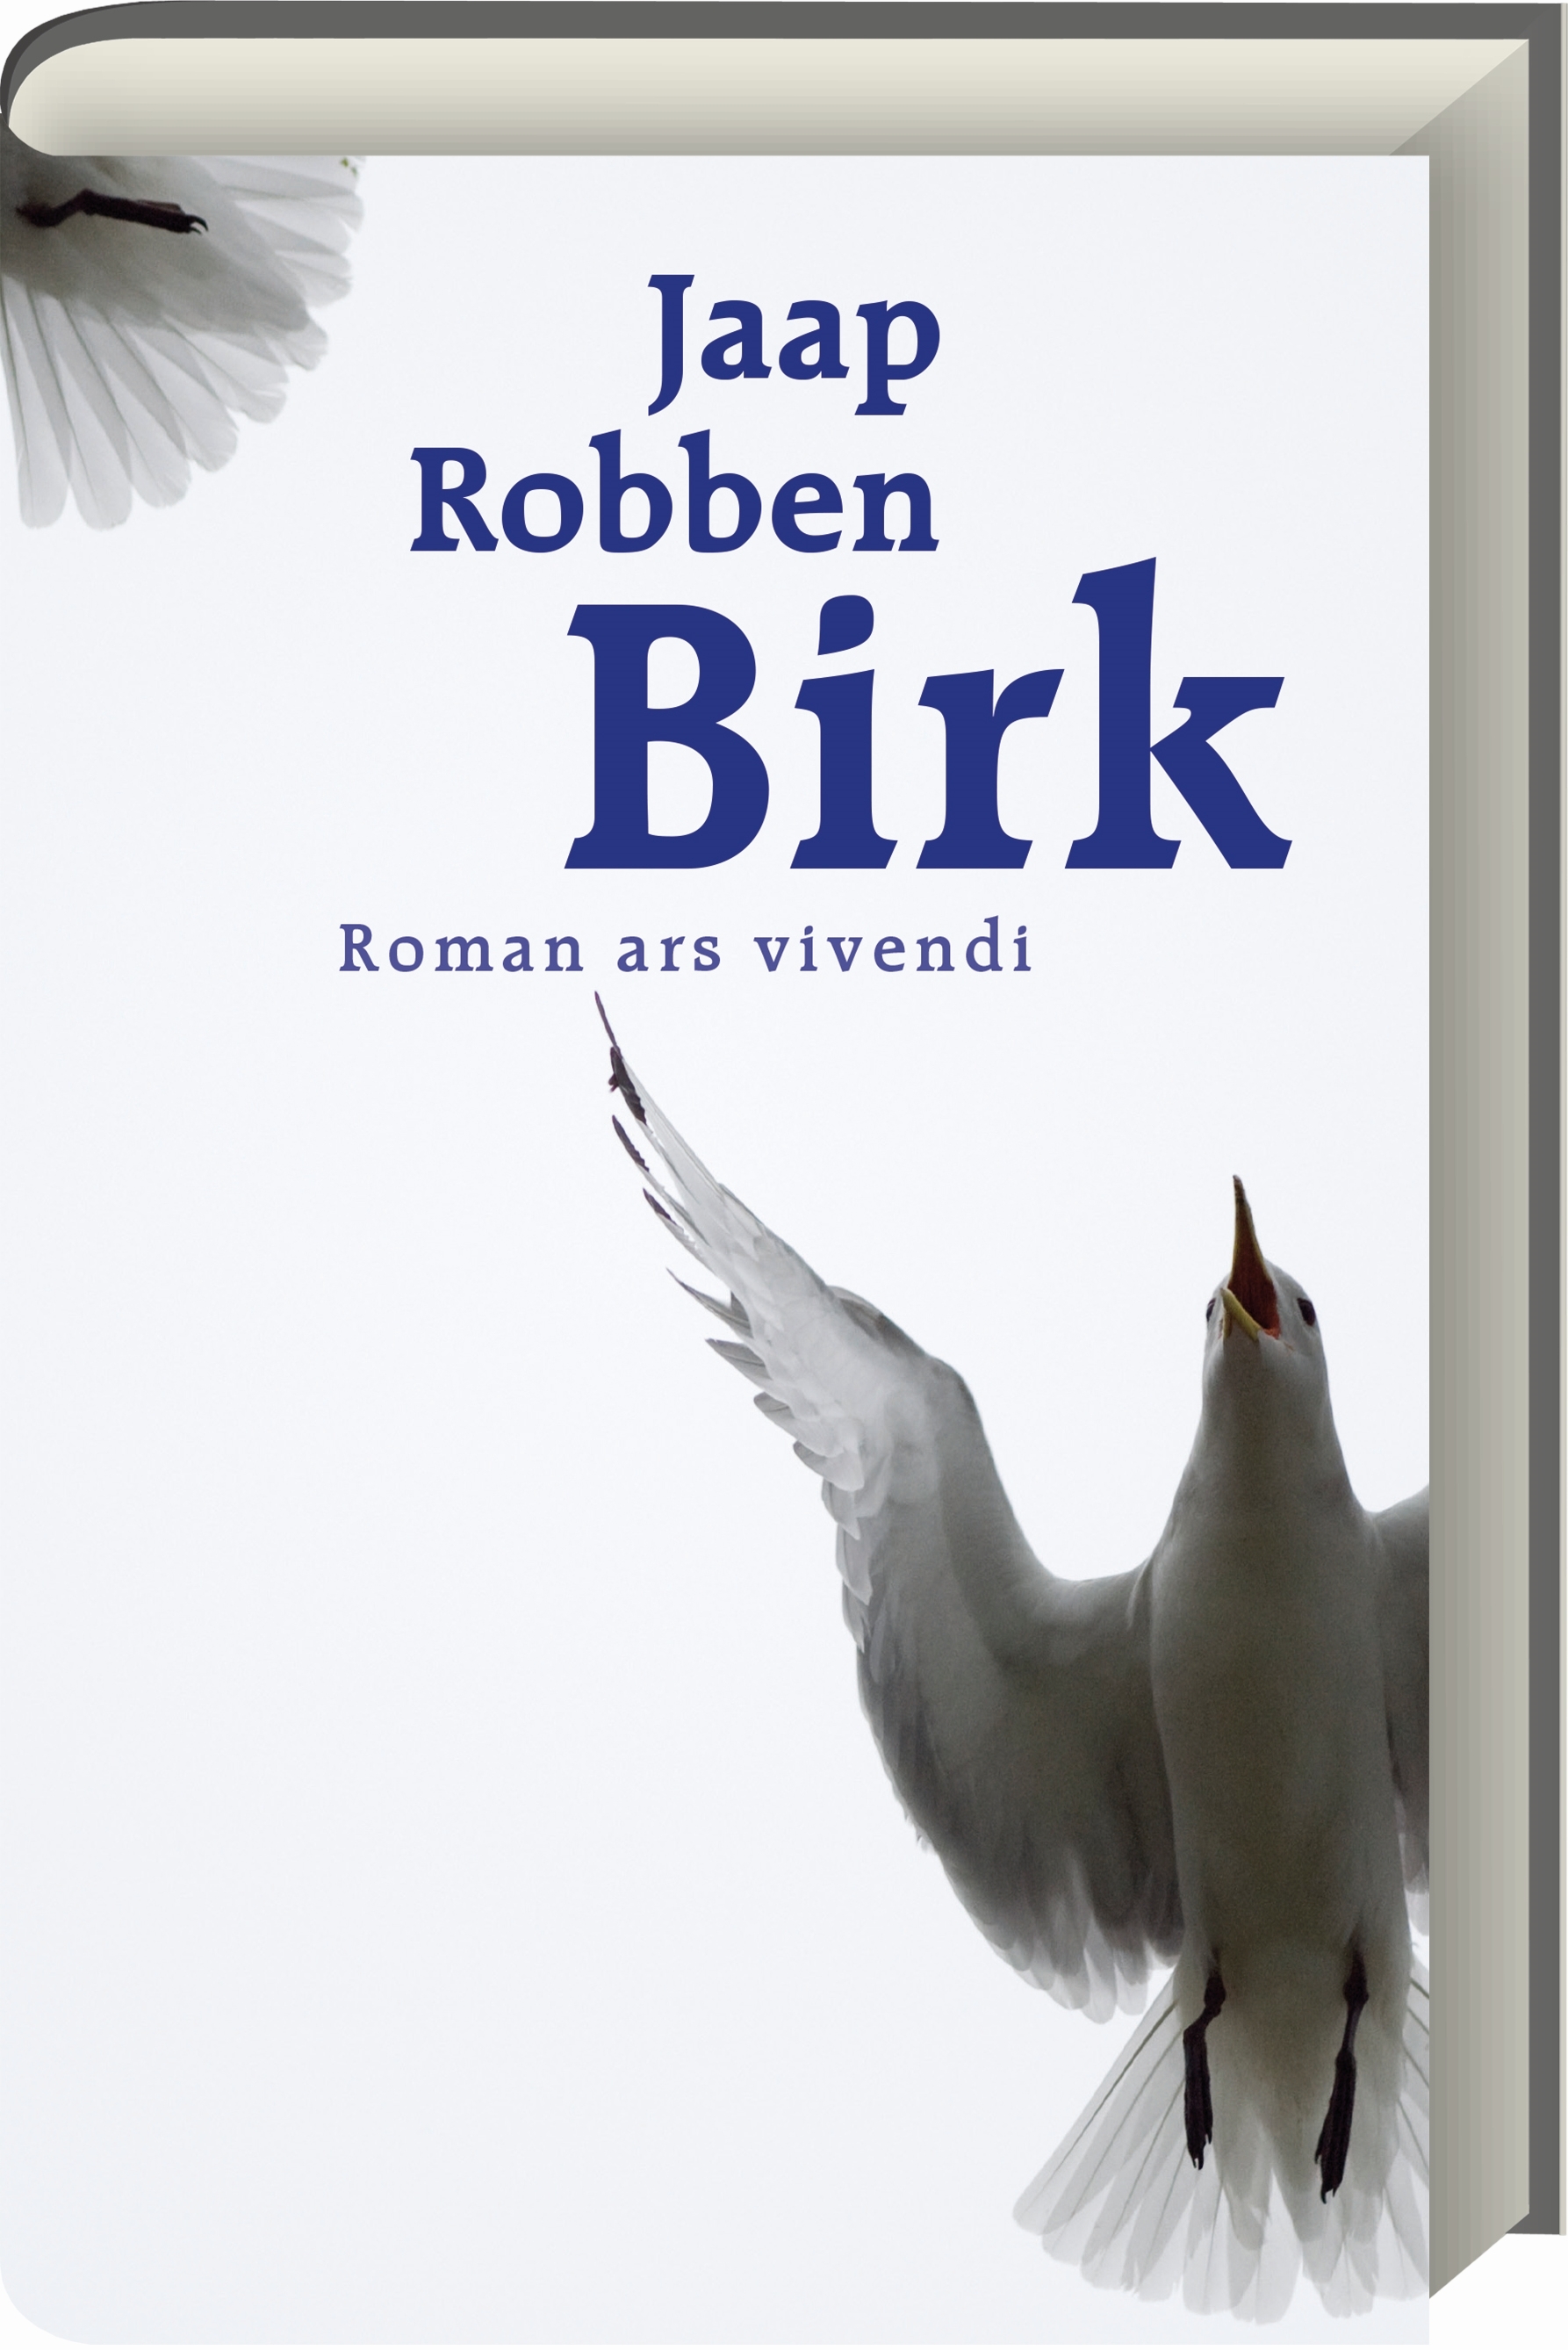 Robben Cover